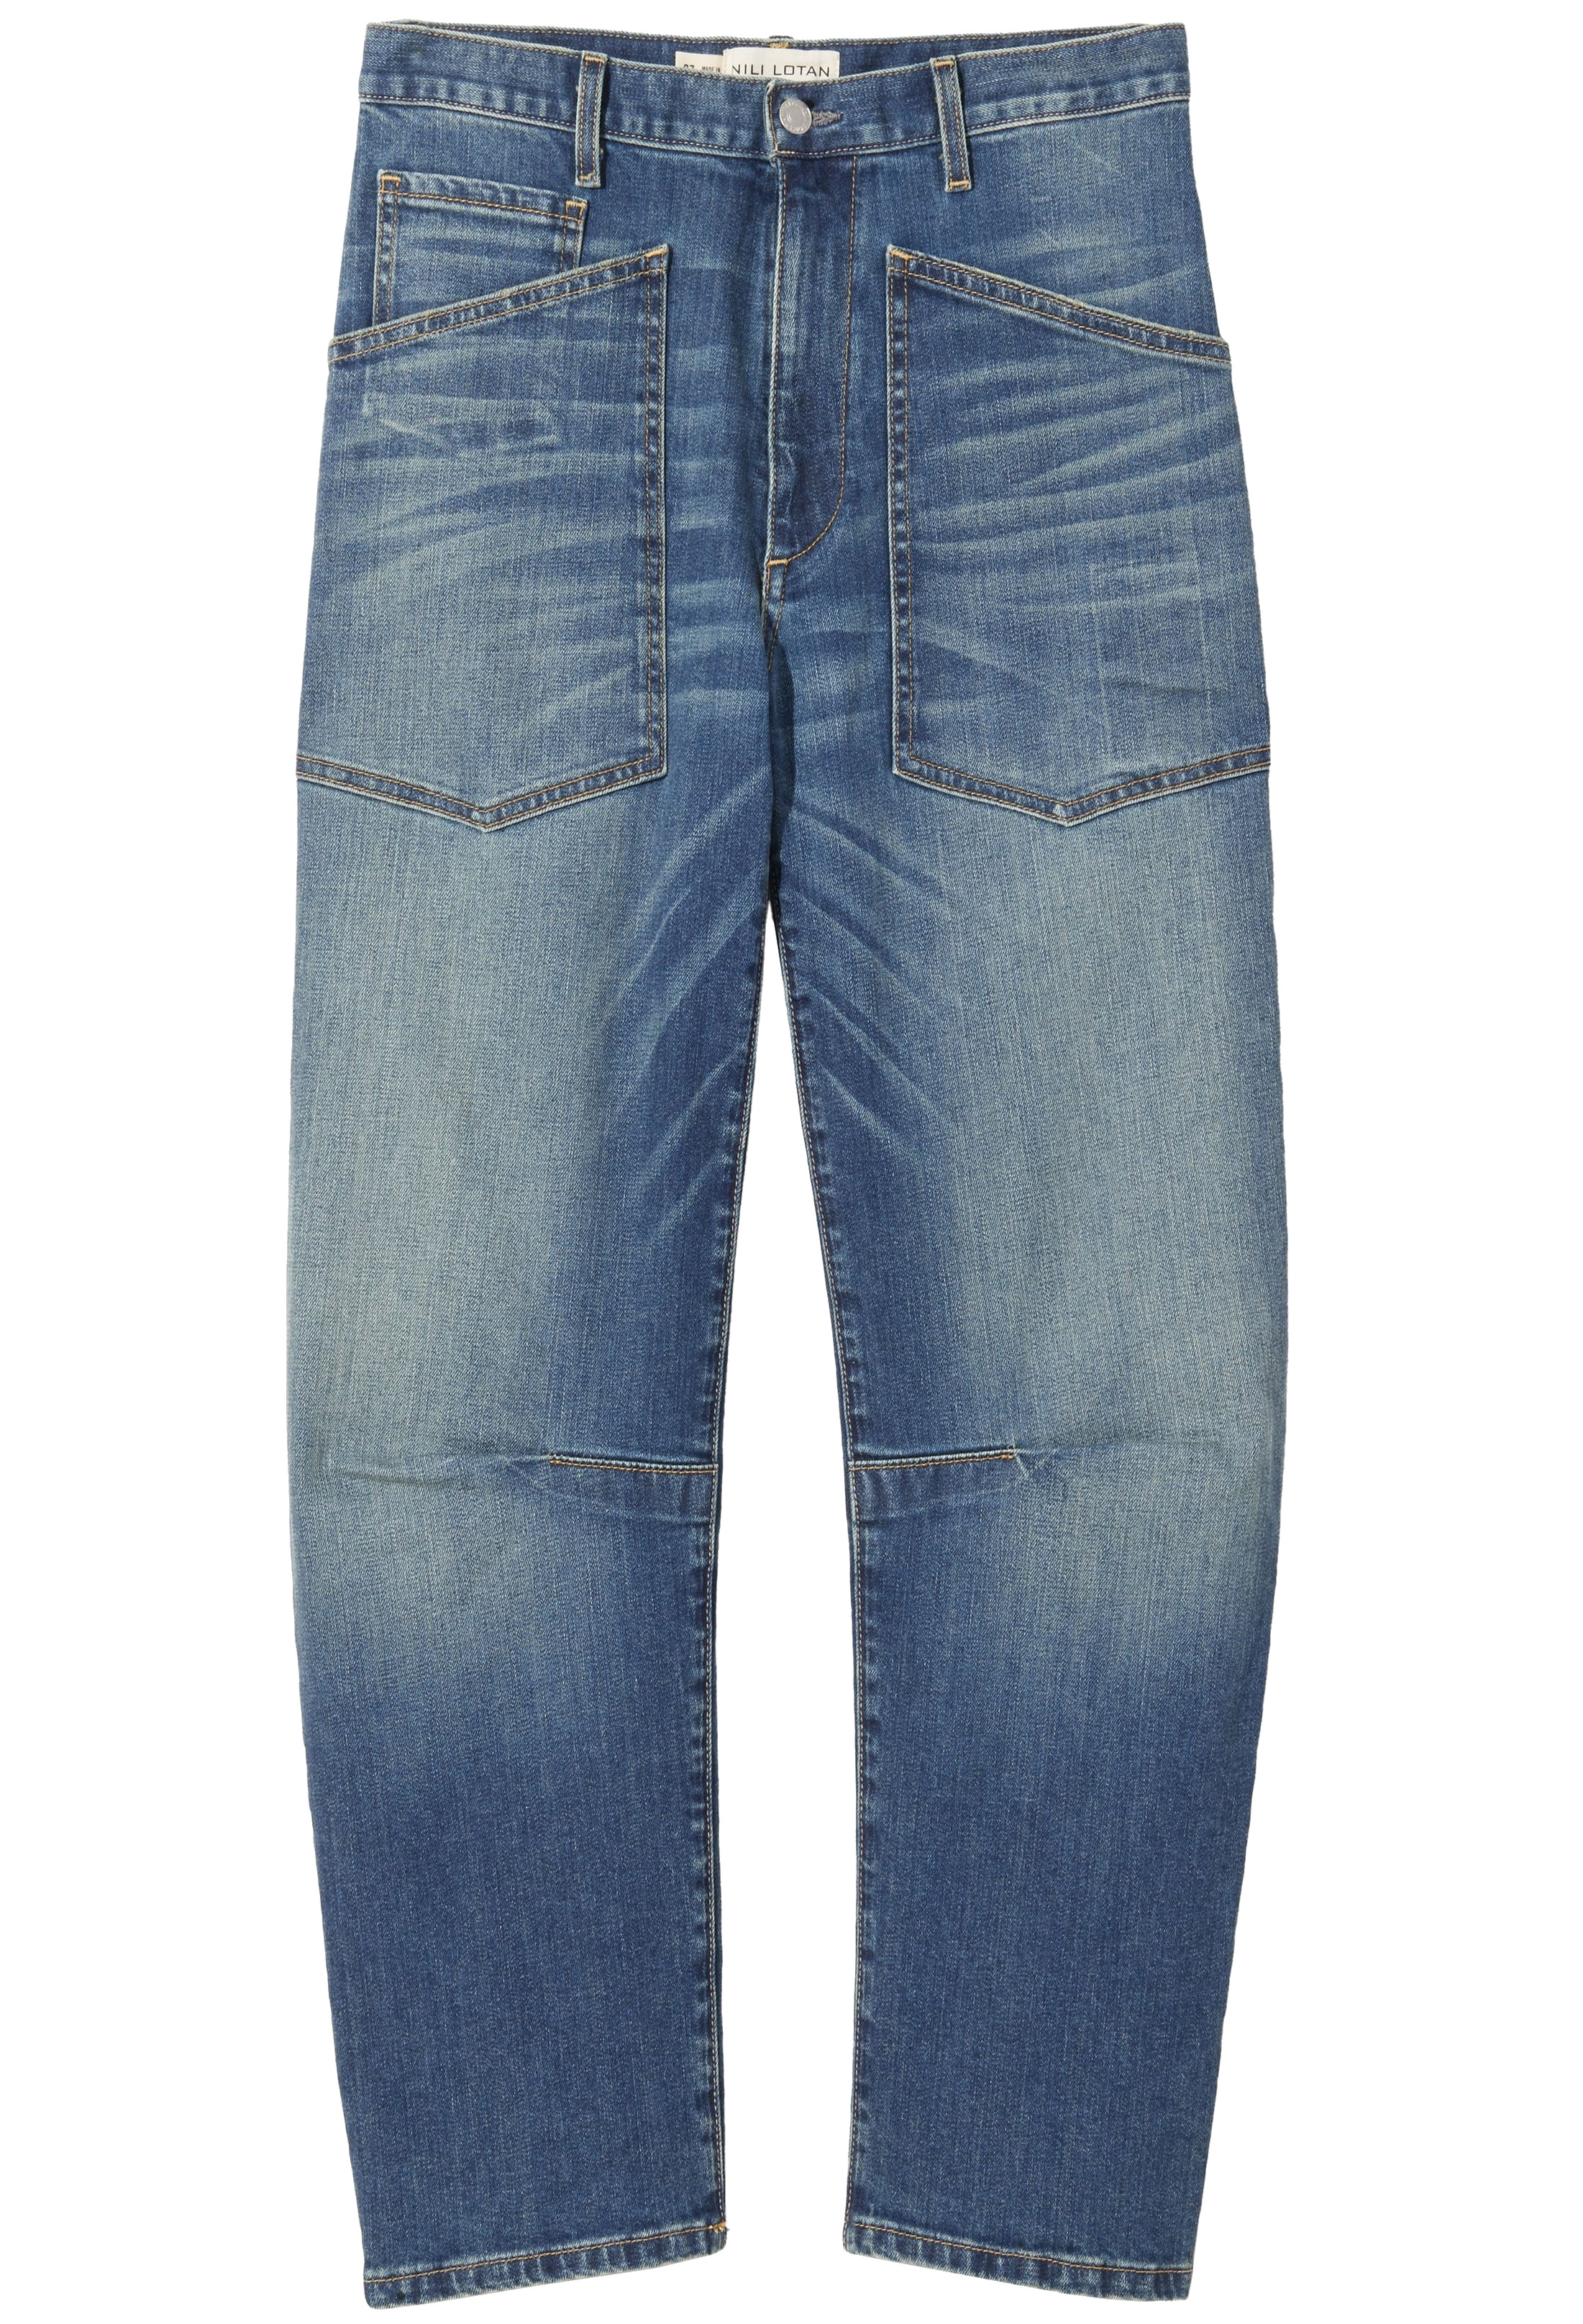 NILI LOTAN Shon Jeans in Ocean Wash 28